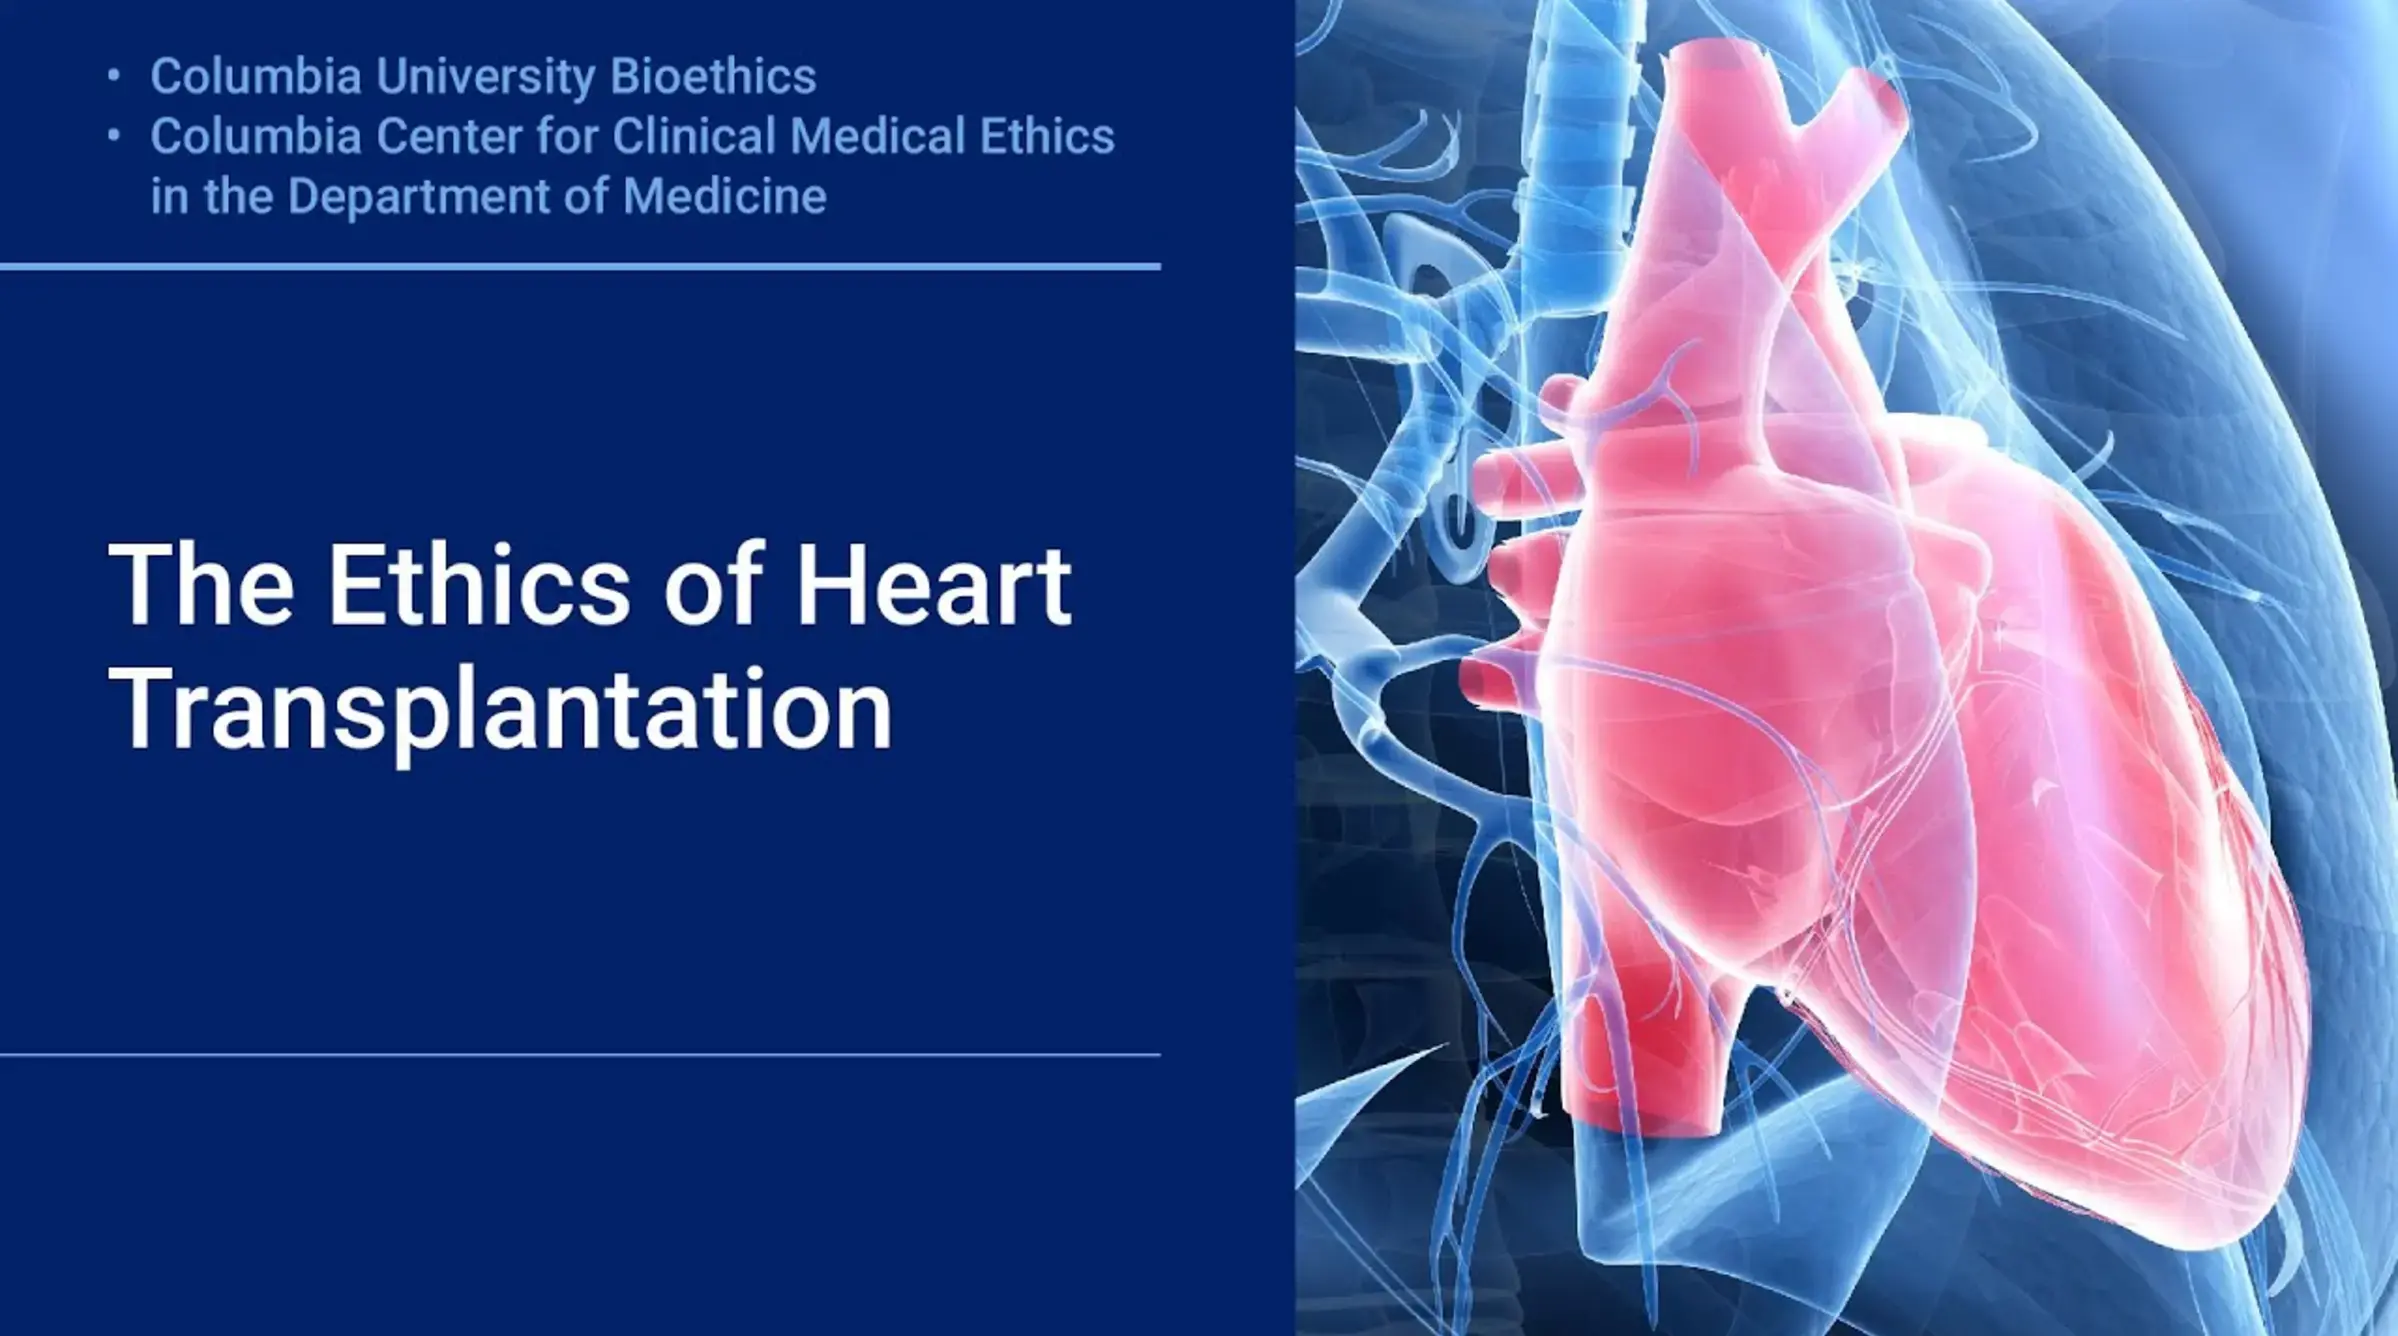 The Ethics of Heart Transplantation